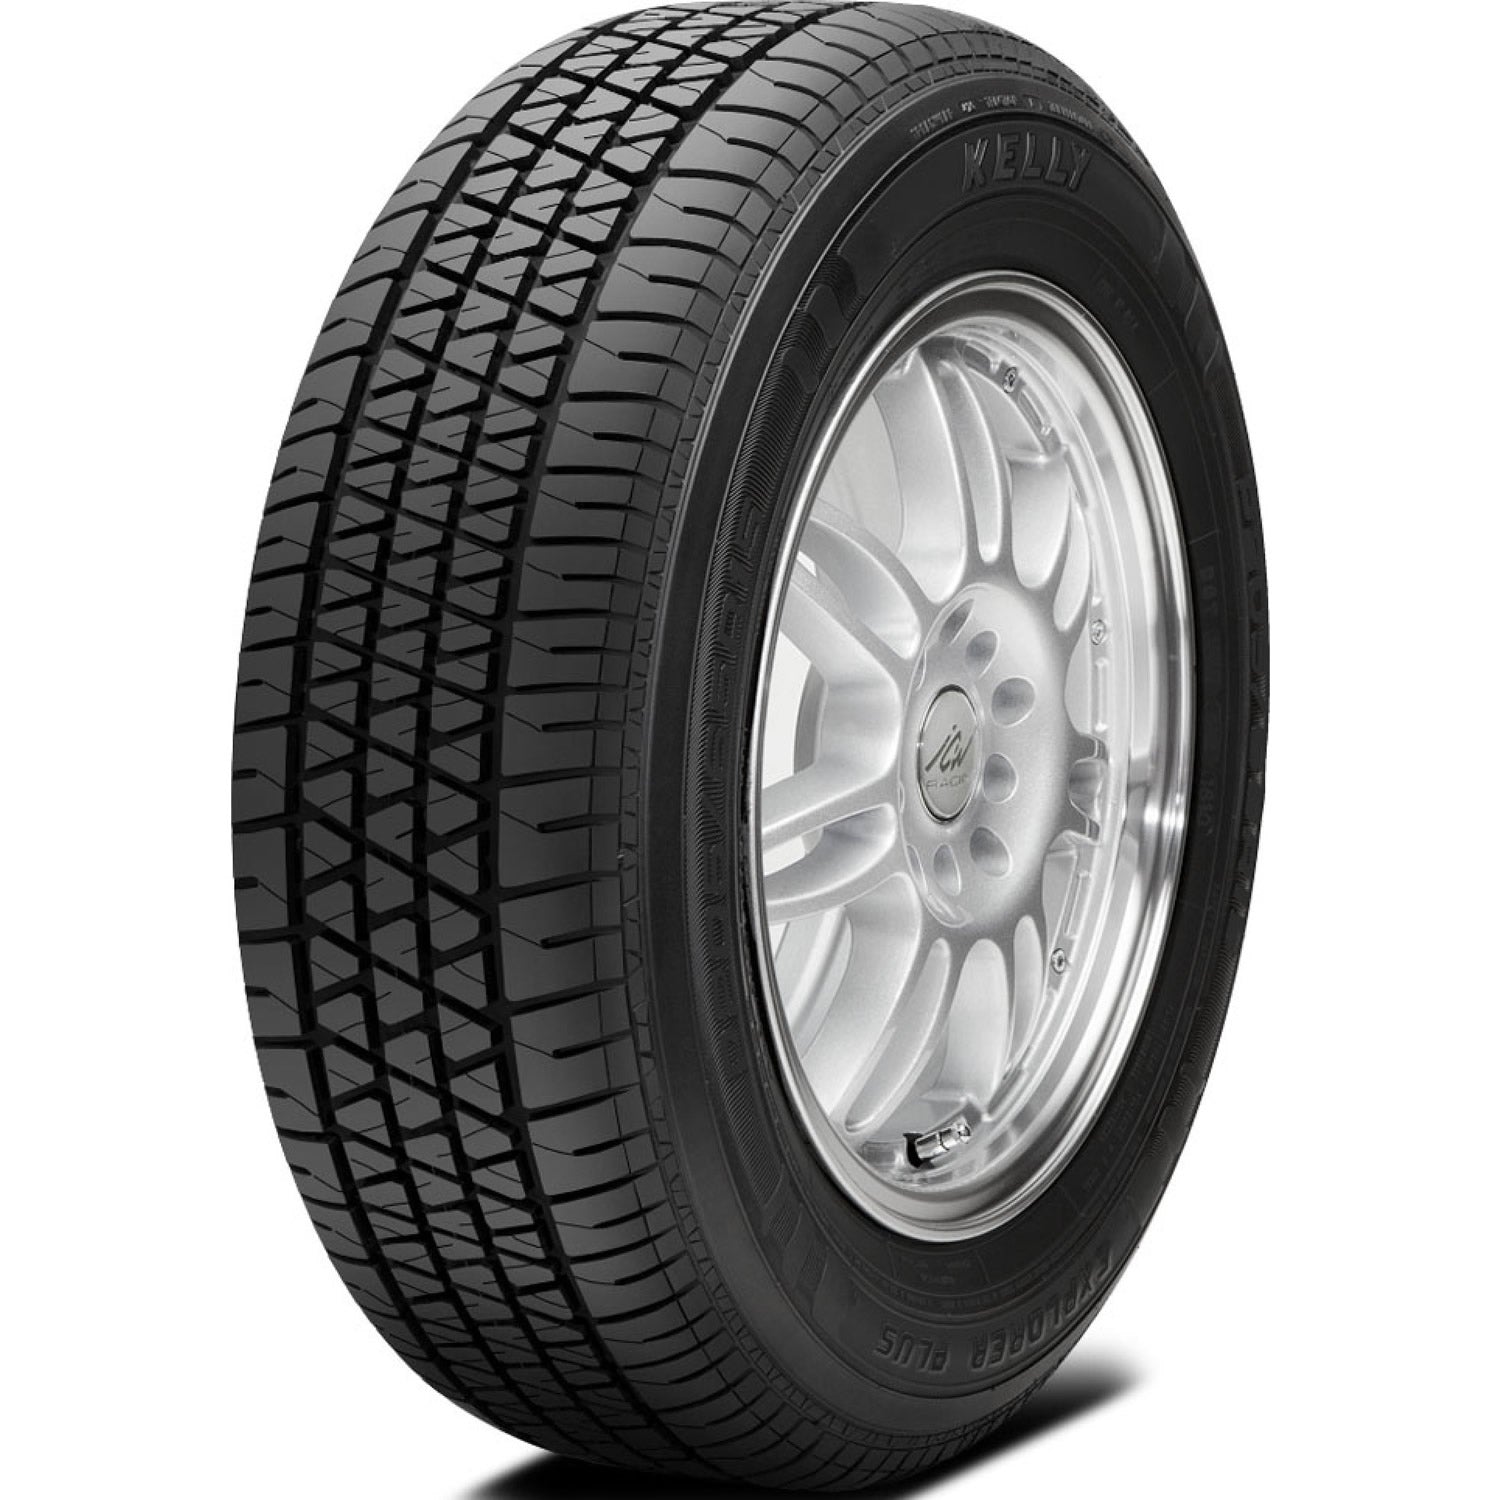 KELLY EXPLORER PLUS 225/65R16 (27.5X8.9R 16) Tires